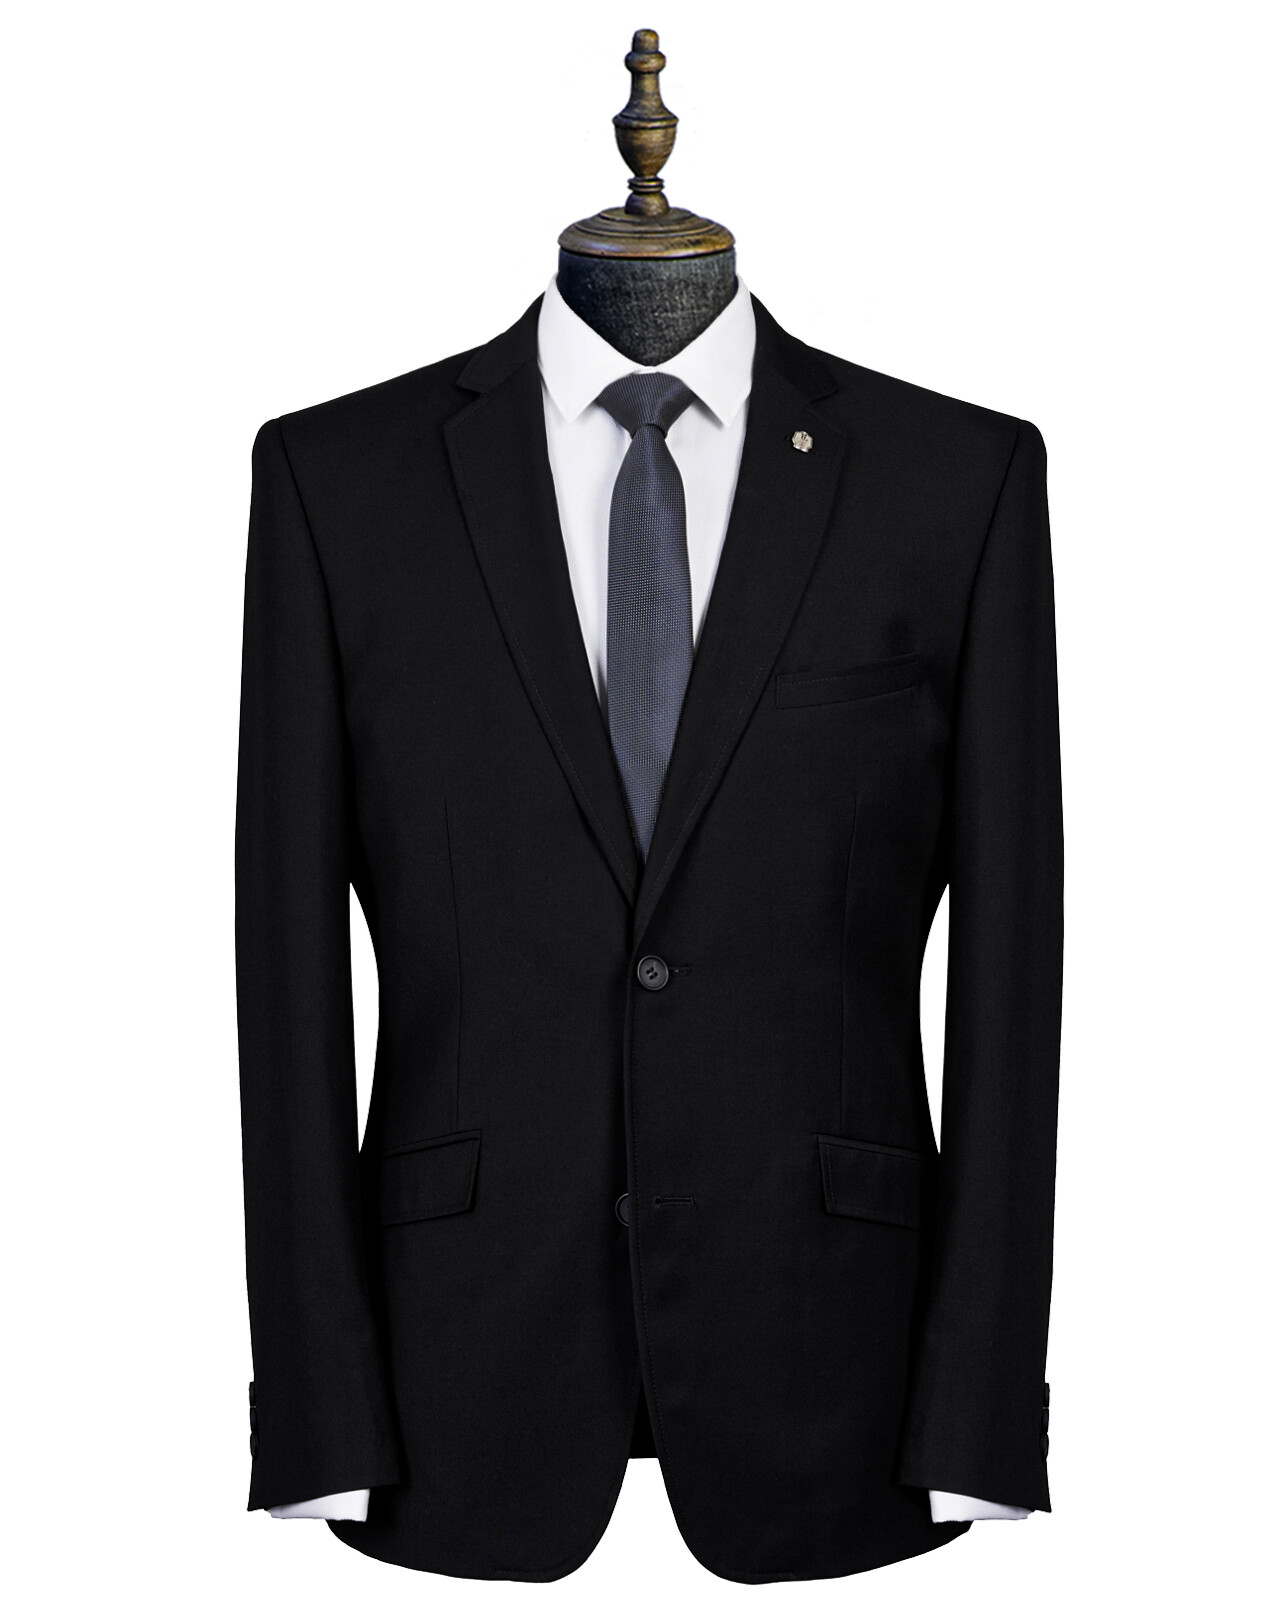 Christian Brookes Bond Black Lounge Suit - Hire or Buy